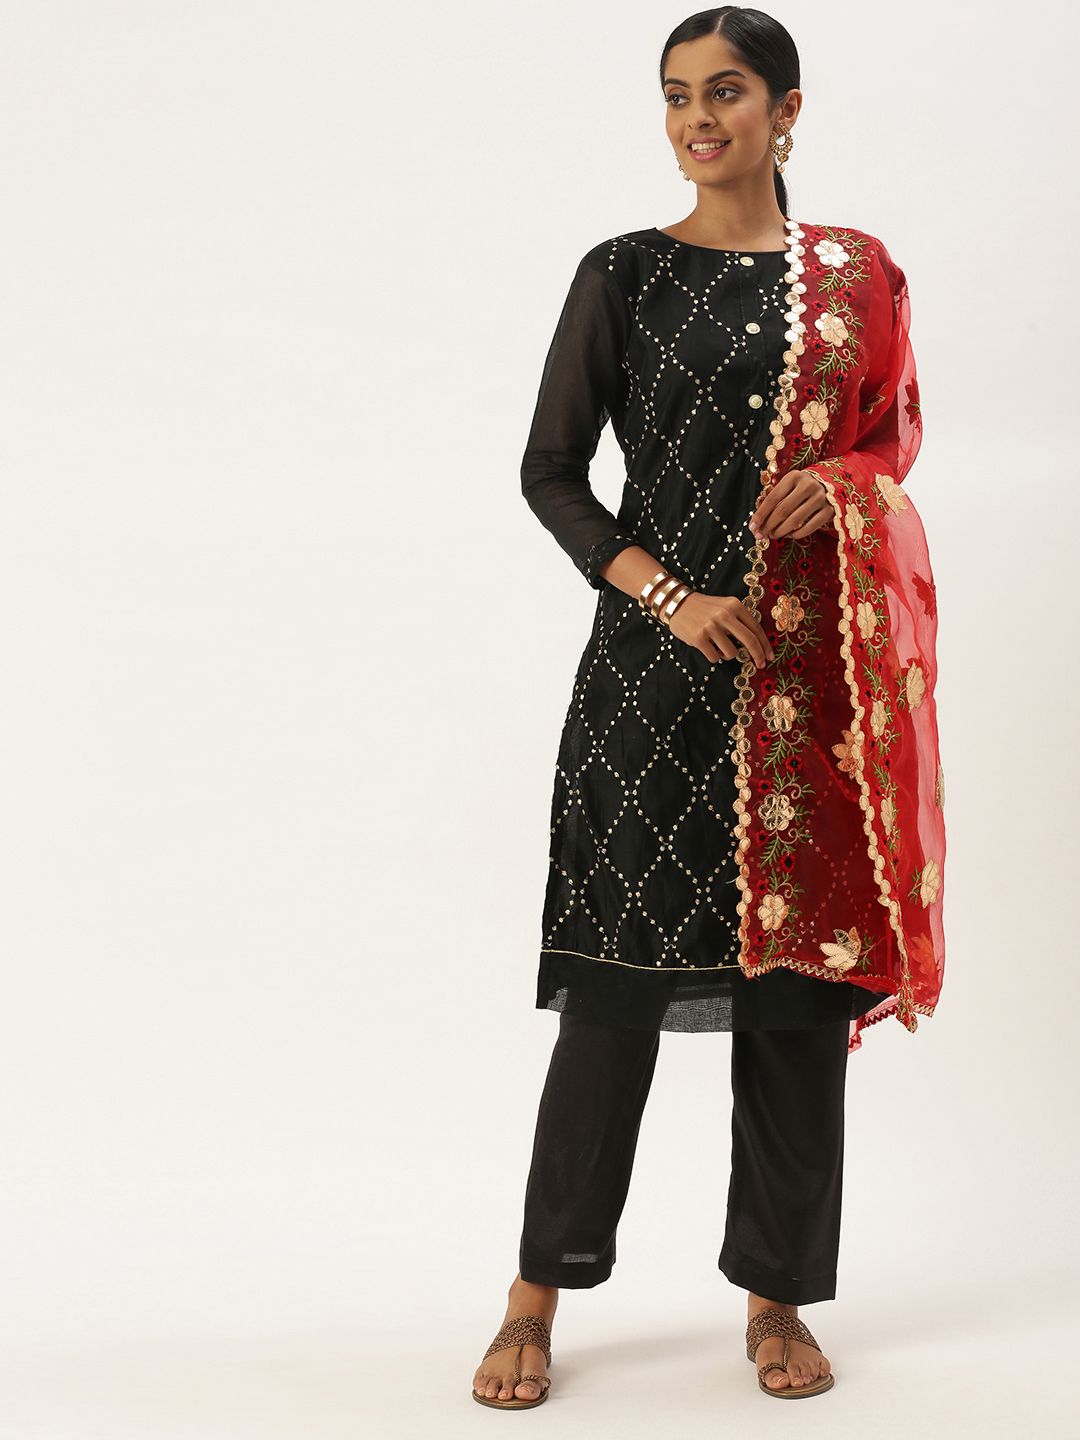 LADUSAA Black Unstitched Dress Material Price in India